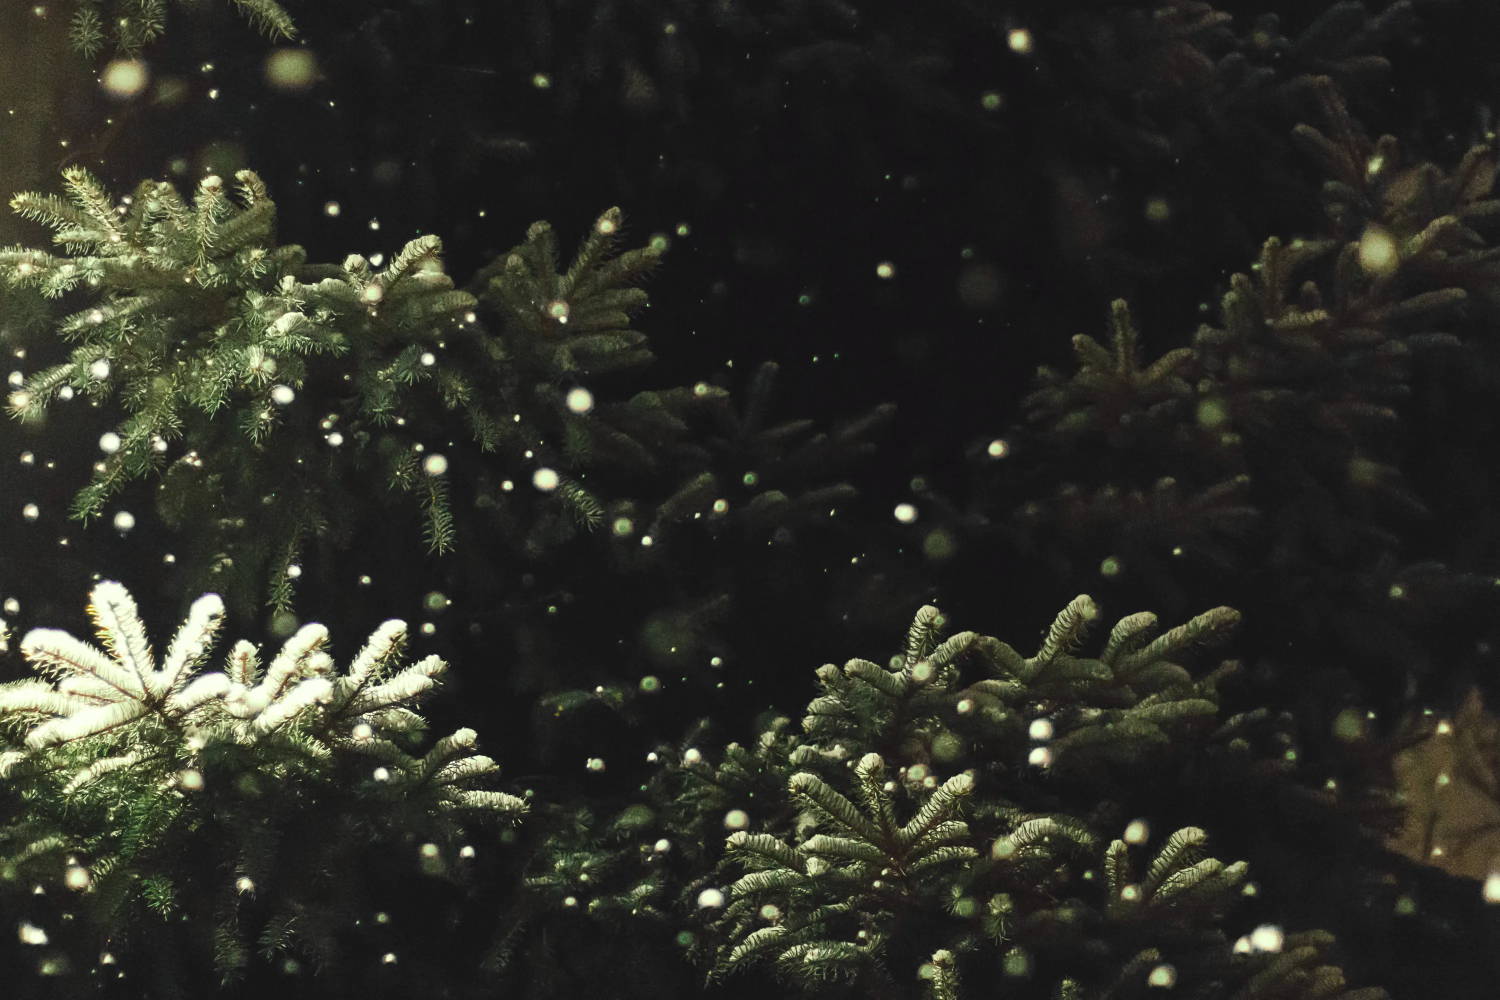 Snow falling through evergreen boughs